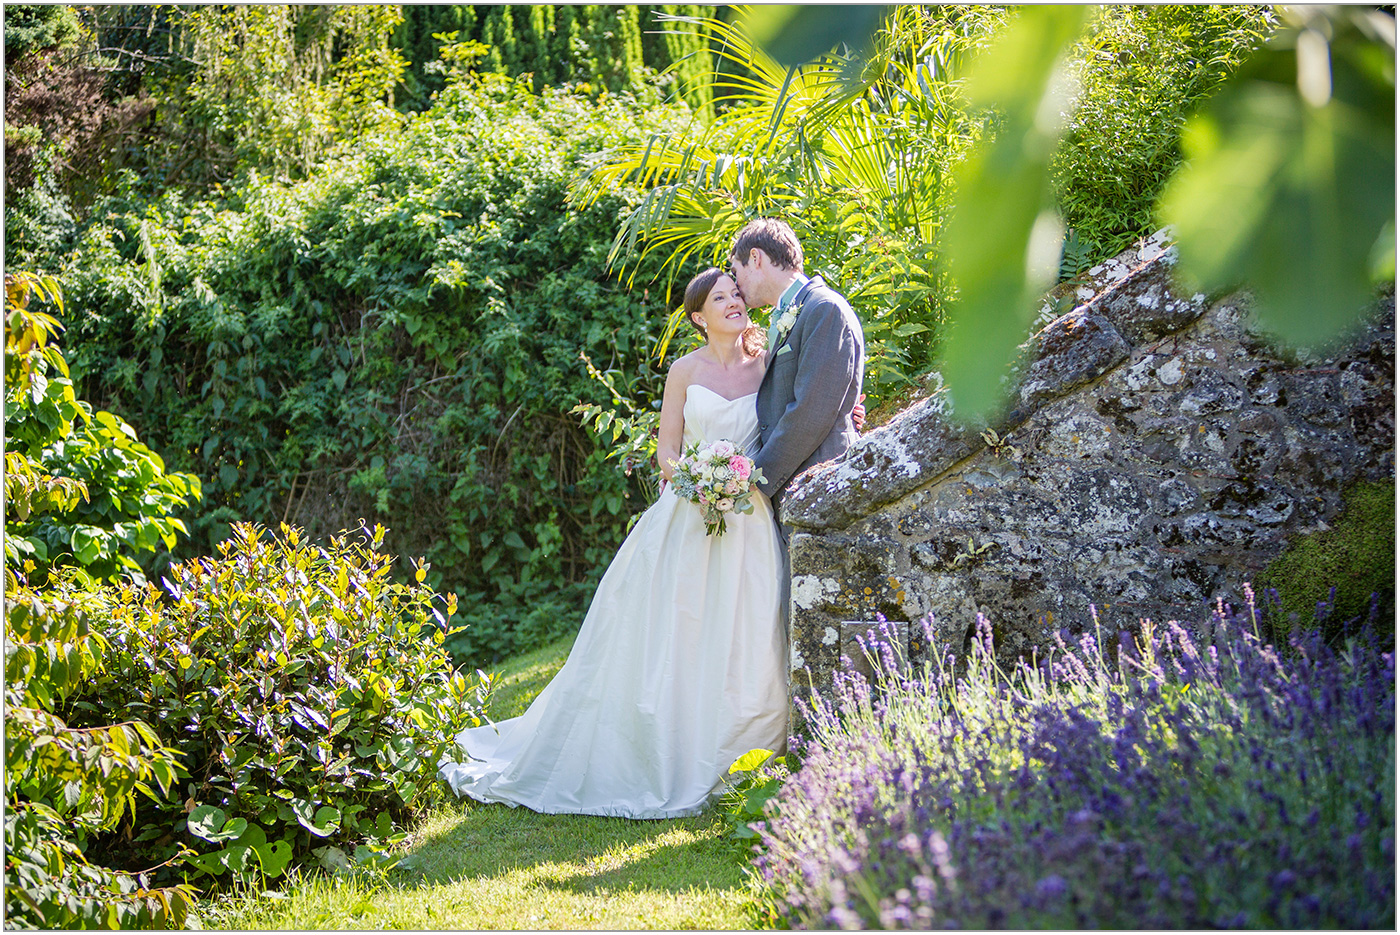 Isle of Wight Weddings | Jack and Julie